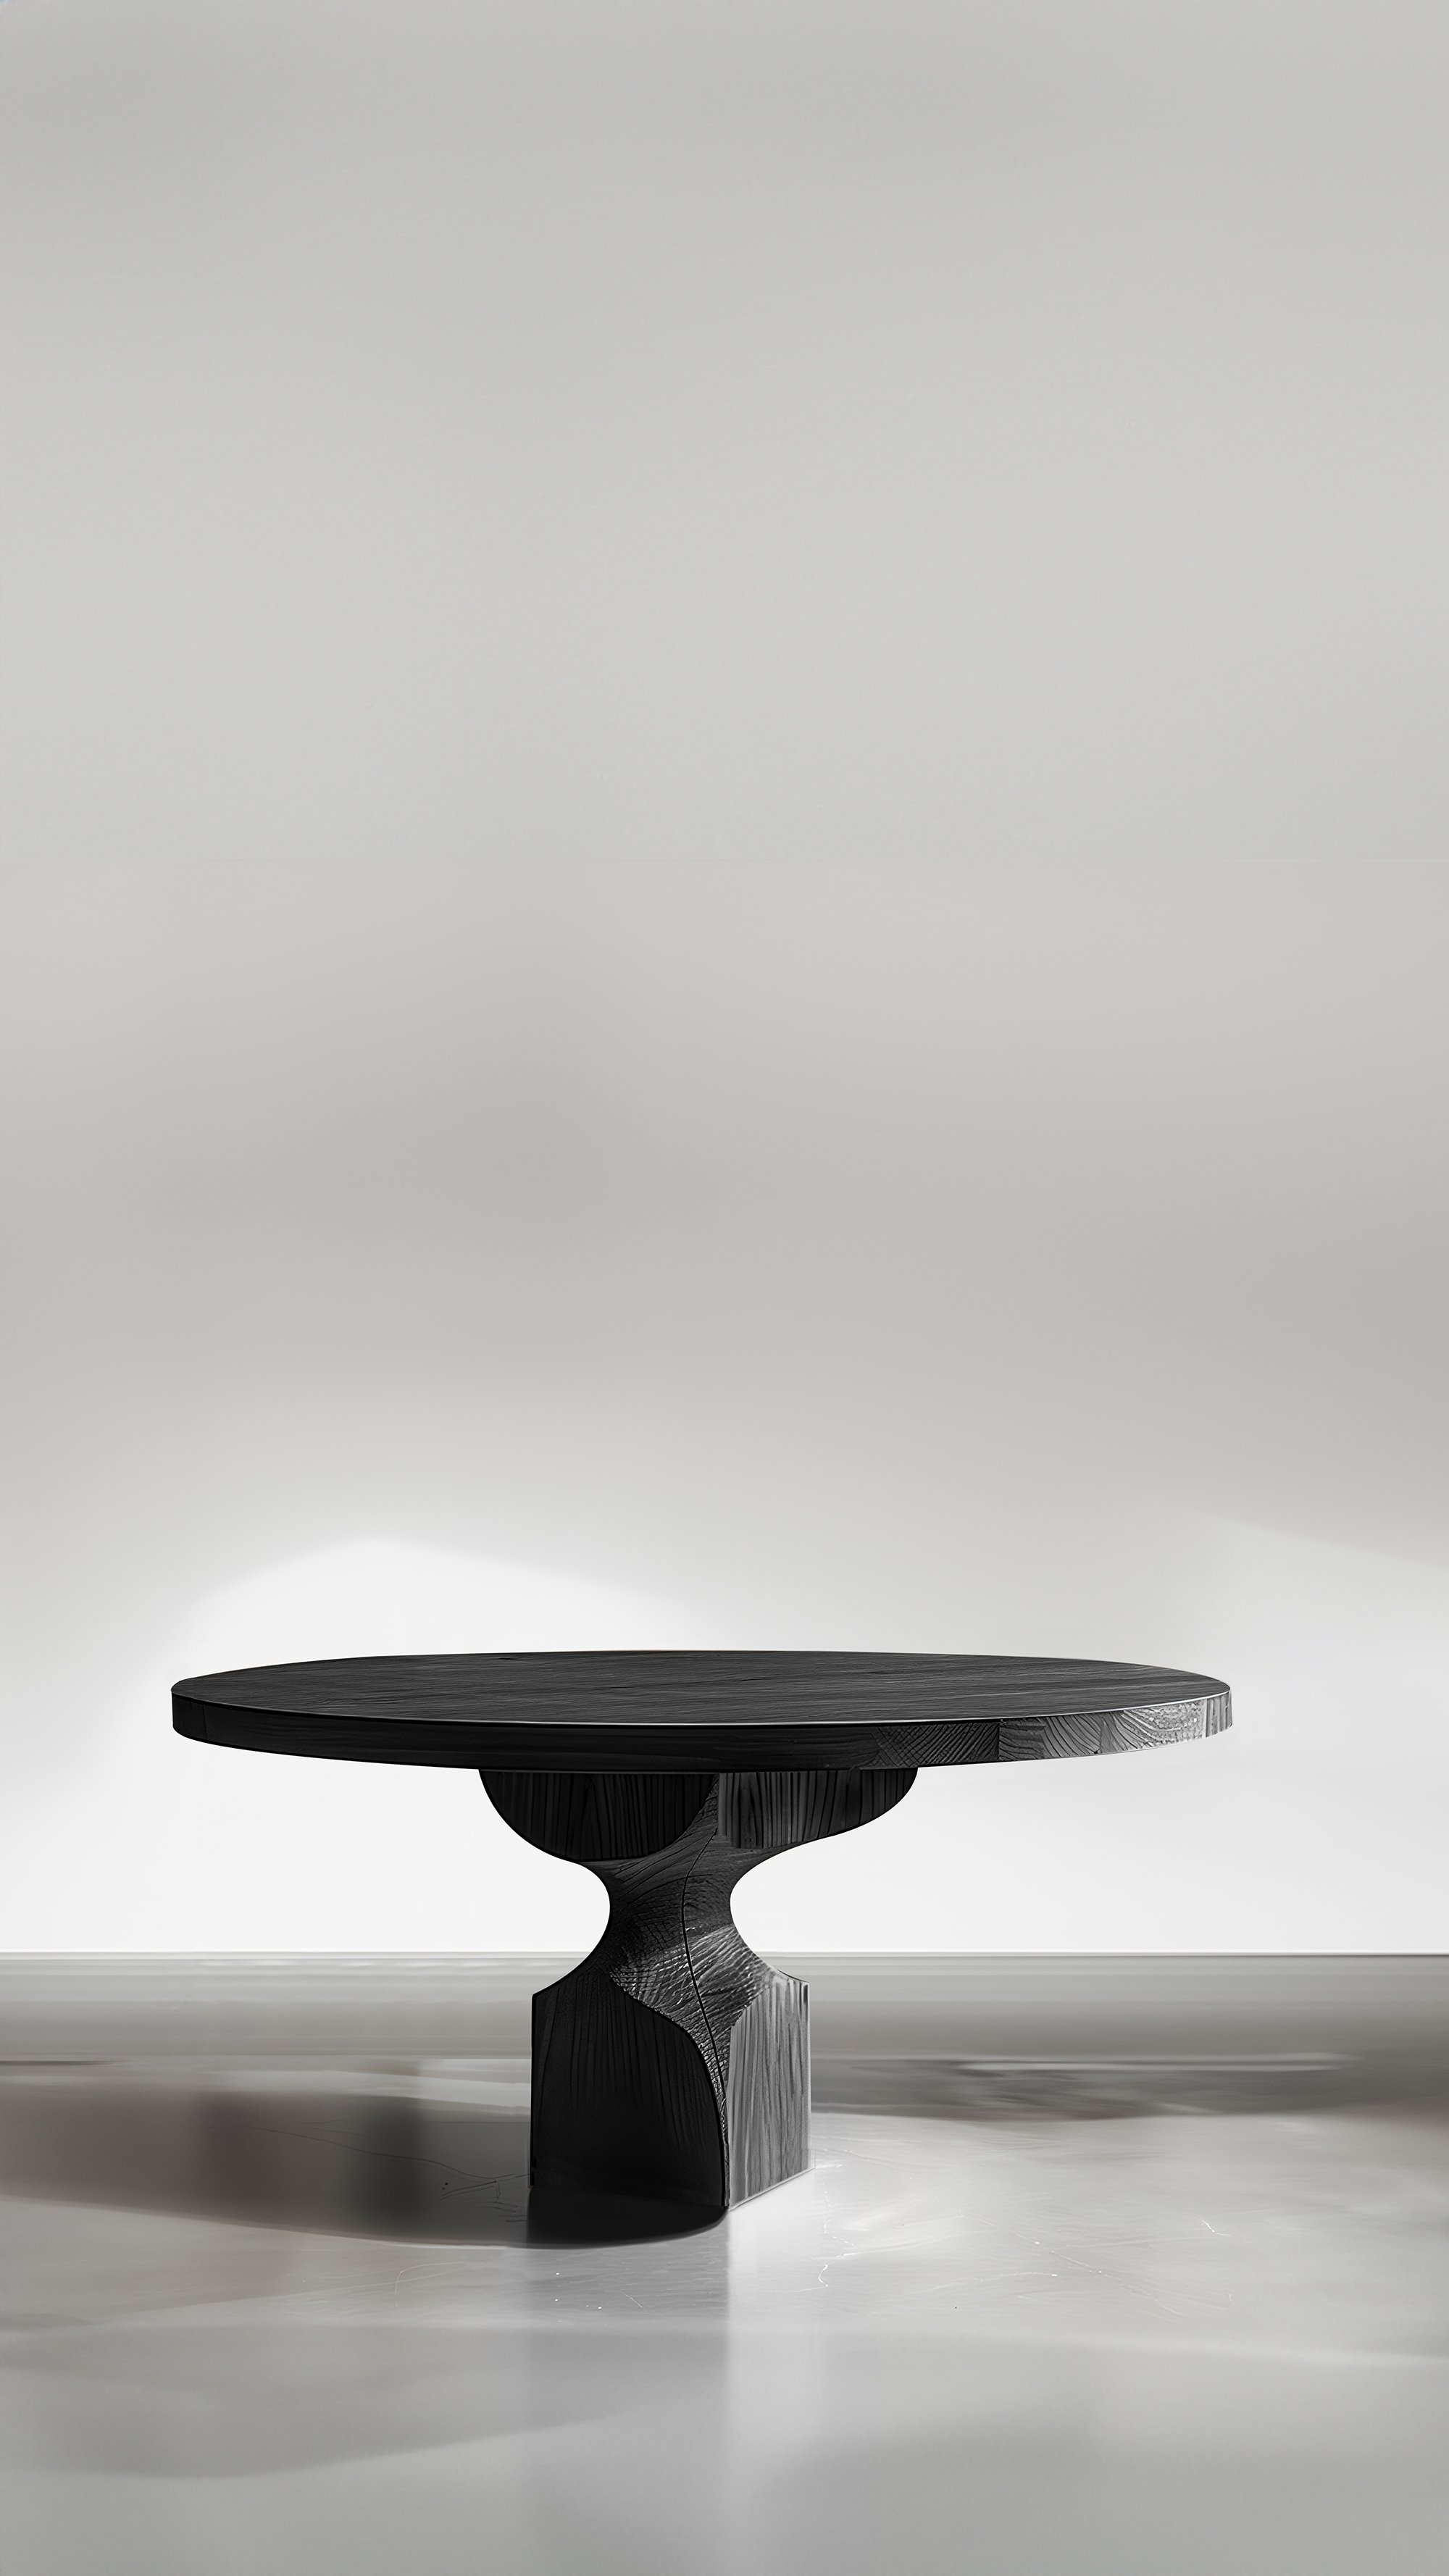 Socle Console Tables, Sleek Design in Black Wood by Joel Escalona No24 5.jpg